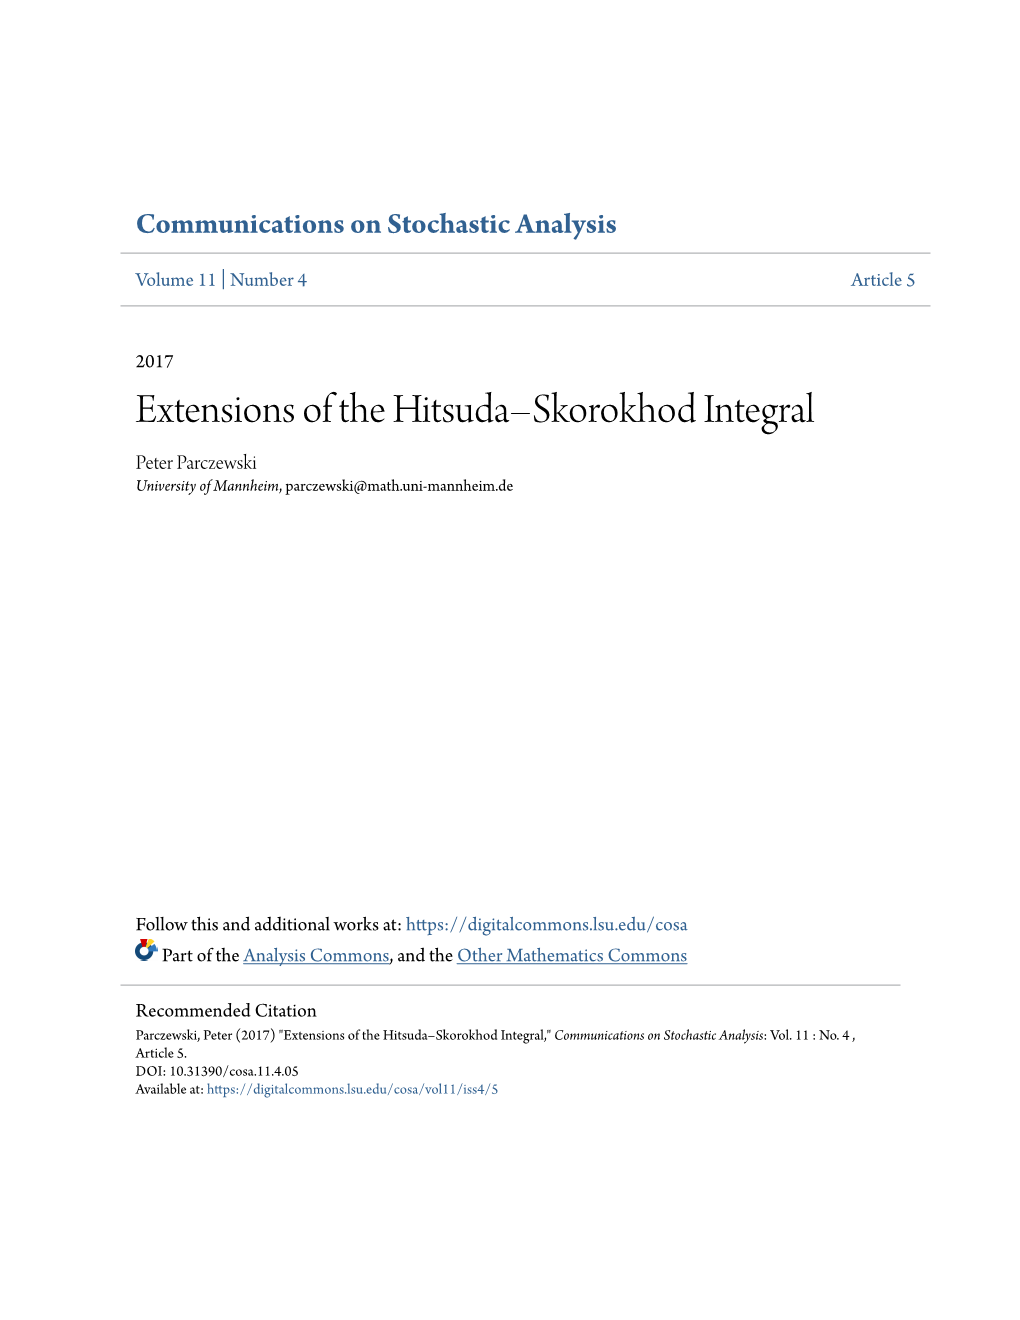 Extensions of the Hitsuda–Skorokhod Integral Peter Parczewski University of Mannheim, Parczewski@Math.Uni-Mannheim.De